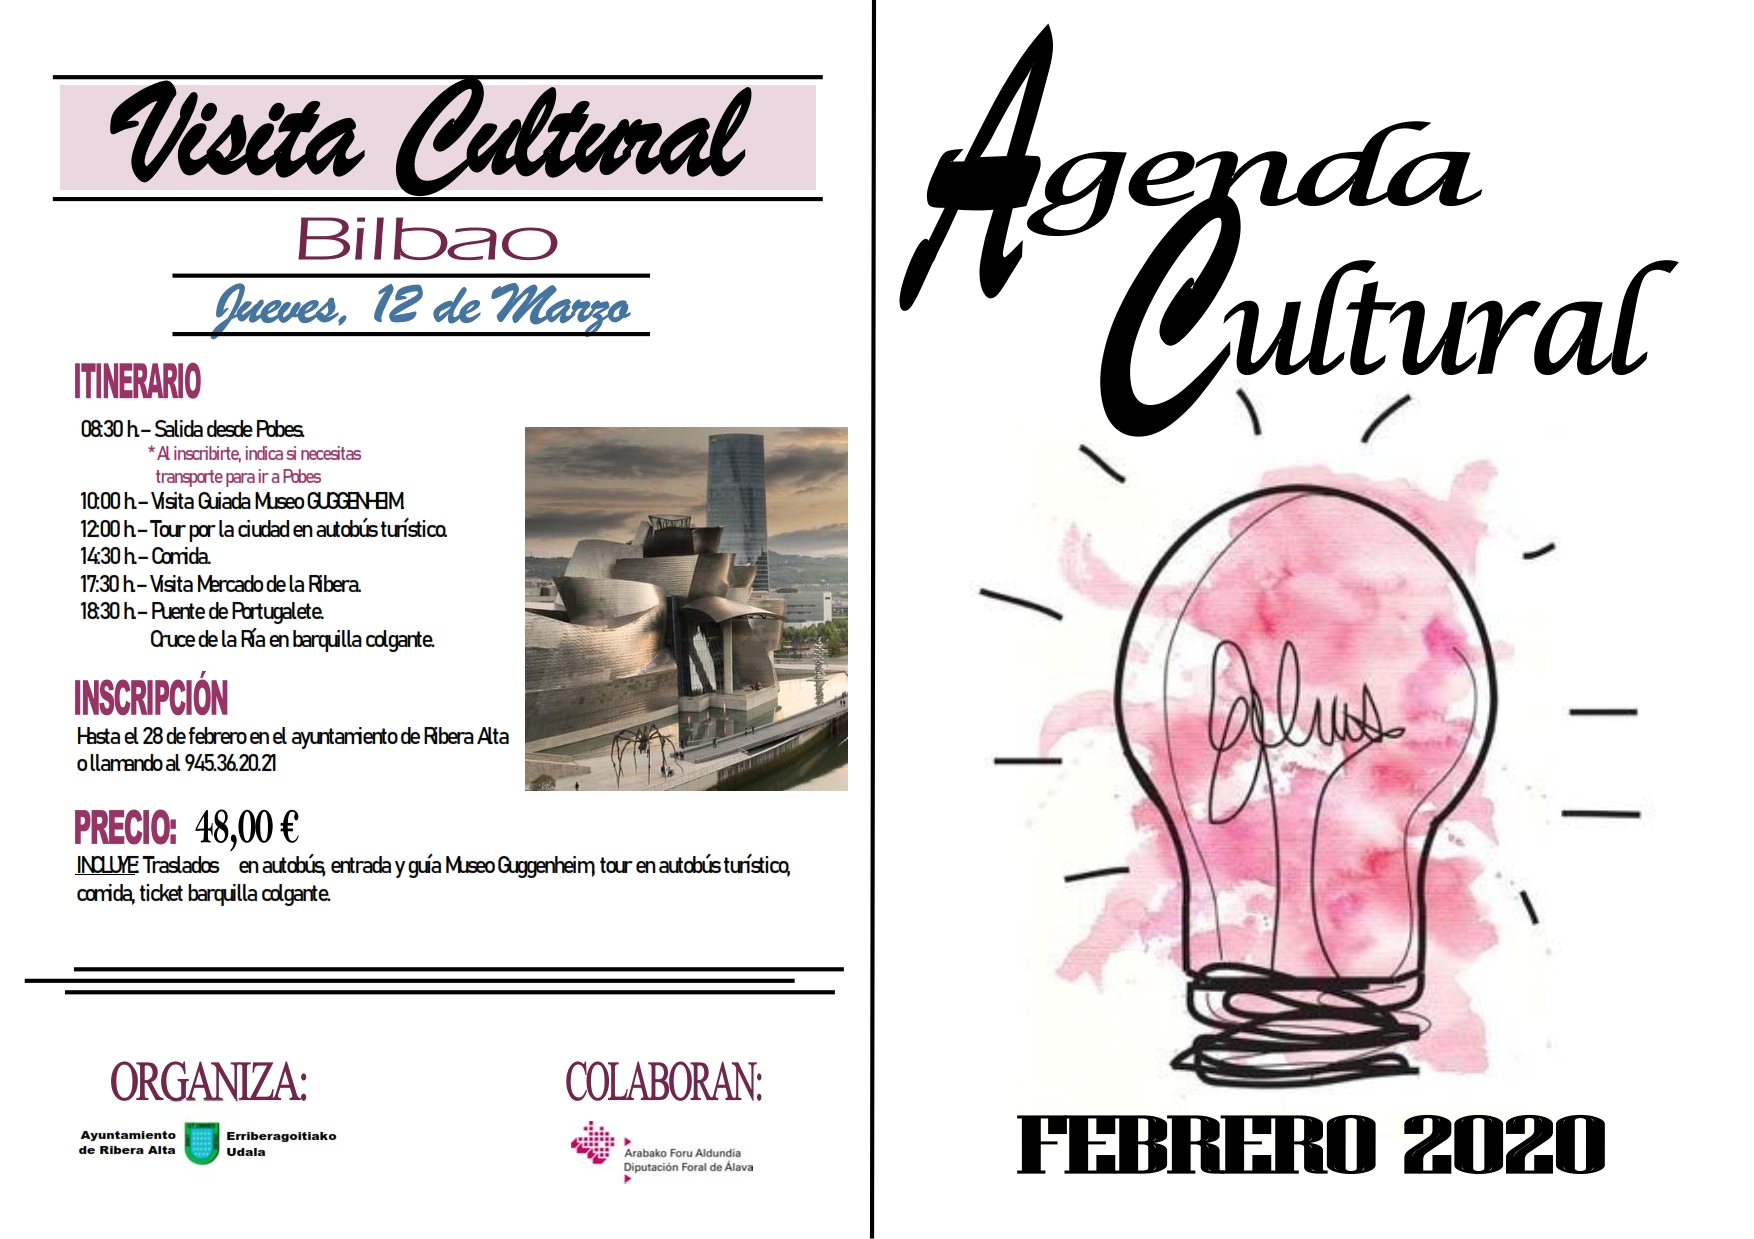 Agenda cultural febrero 2020, en Ribera alta / Erriberagoitia